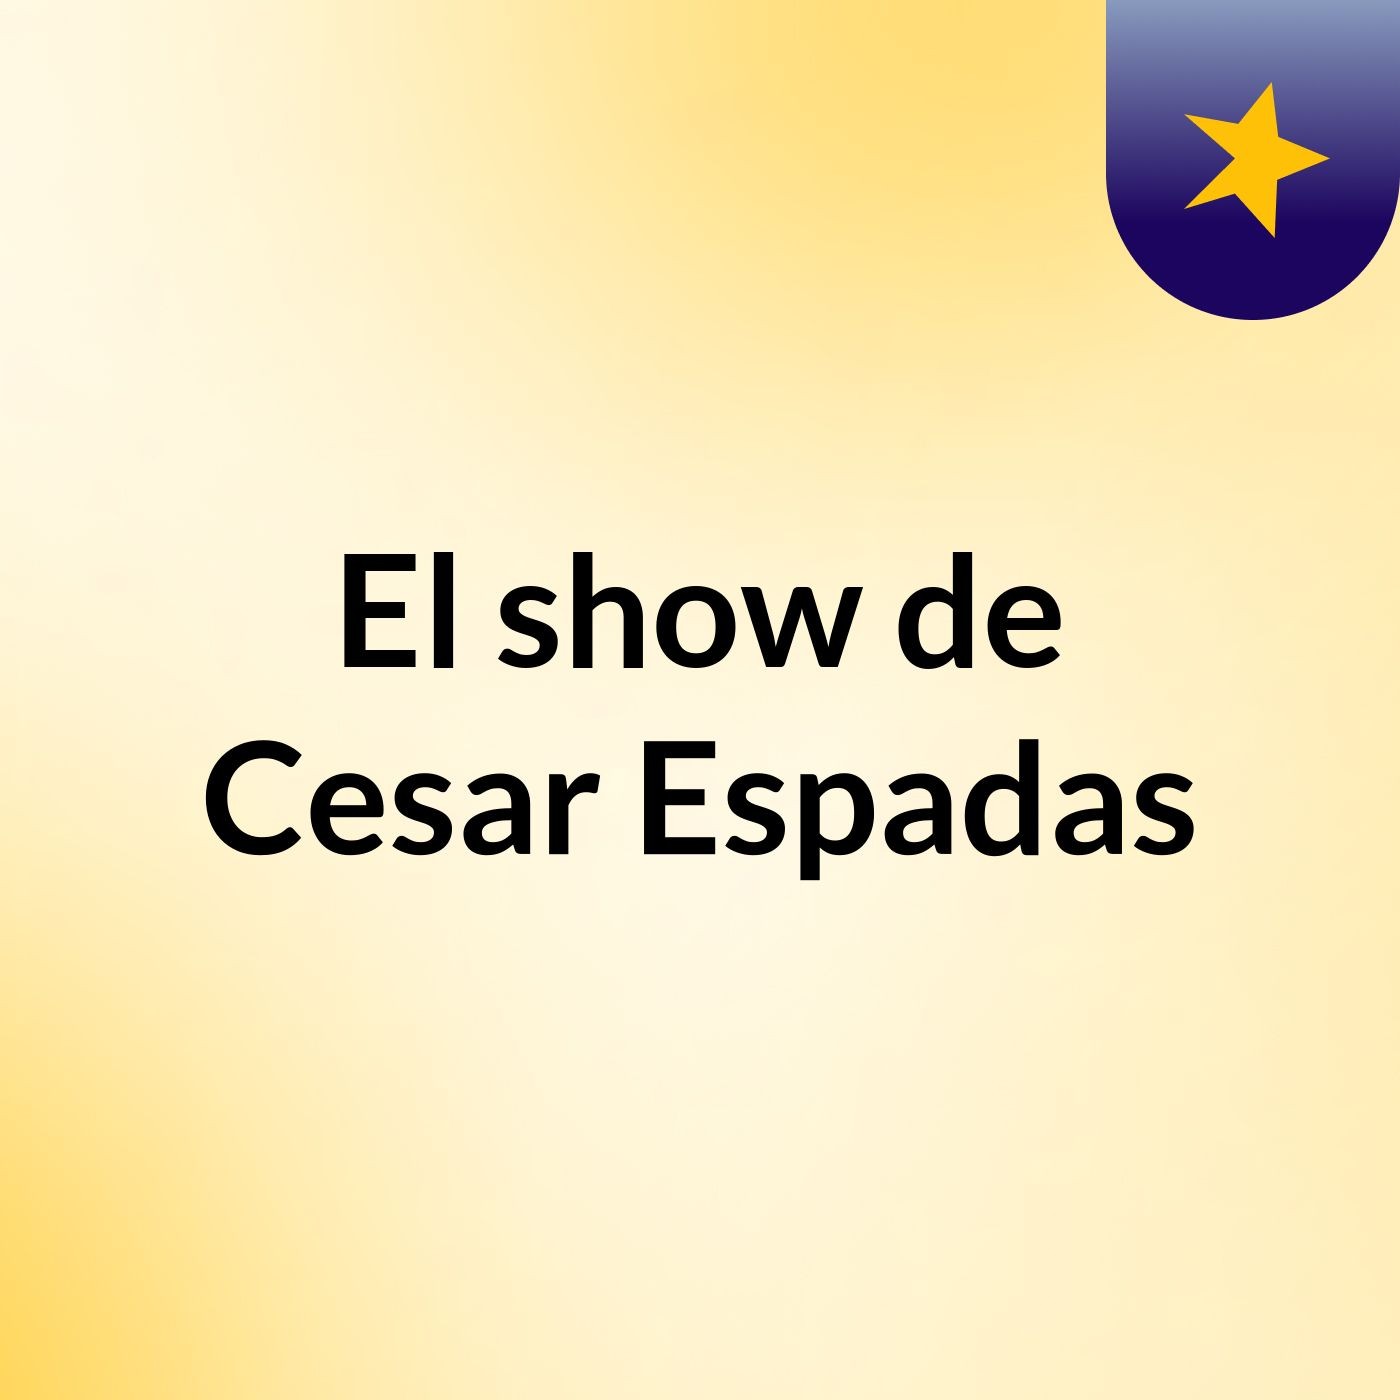 El show de Cesar Espadas